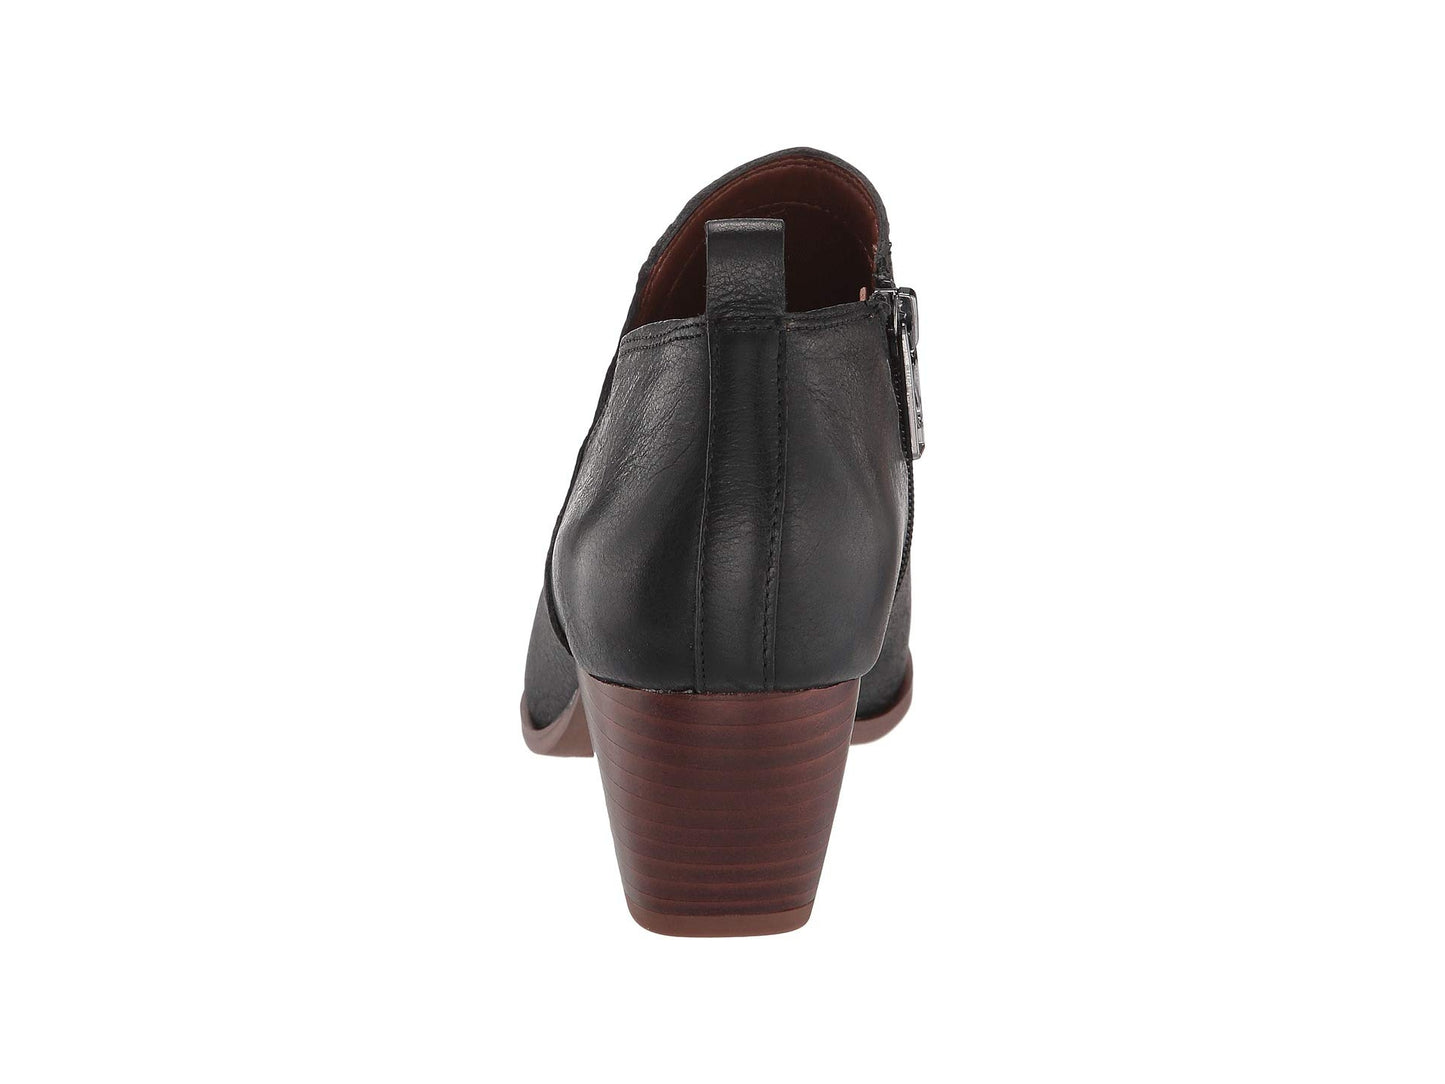 Dingo Black Leather Franco Sarto Ankle Boots